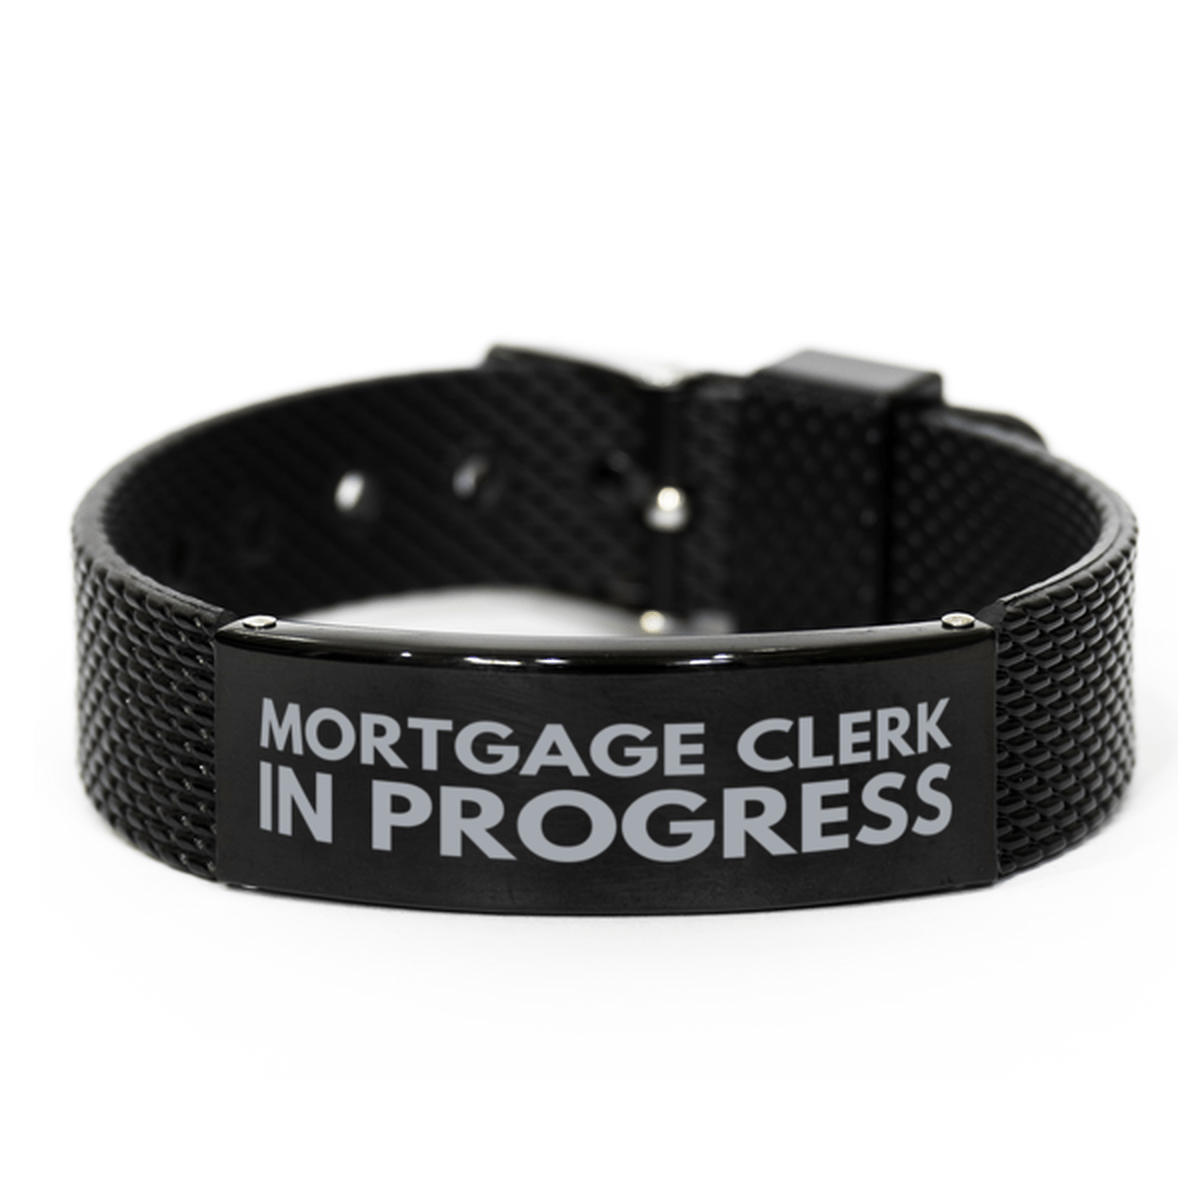 Inspirational Mortgage Clerk Black Shark Mesh Bracelet, Mortgage Clerk In Progress, Best Graduation Gifts for Students